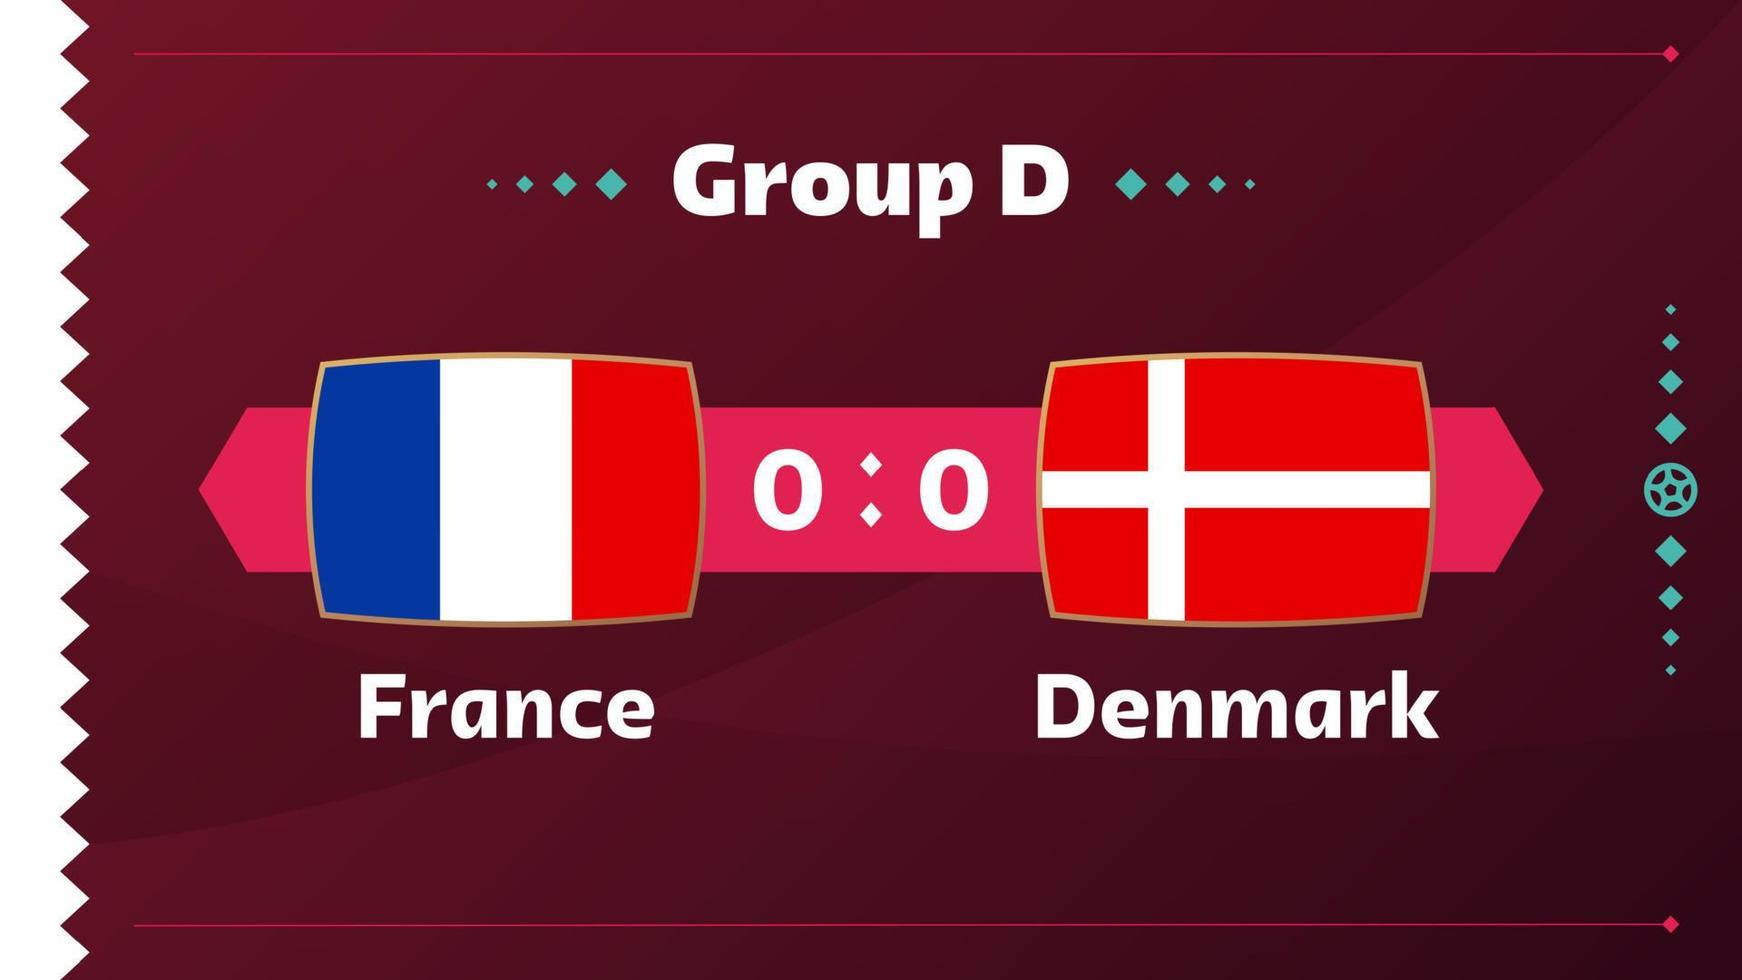 France vs Denmark, Football 2022, Group D. World Football Competition championship match versus teams intro sport background, championship competition final poster, vector illustration.